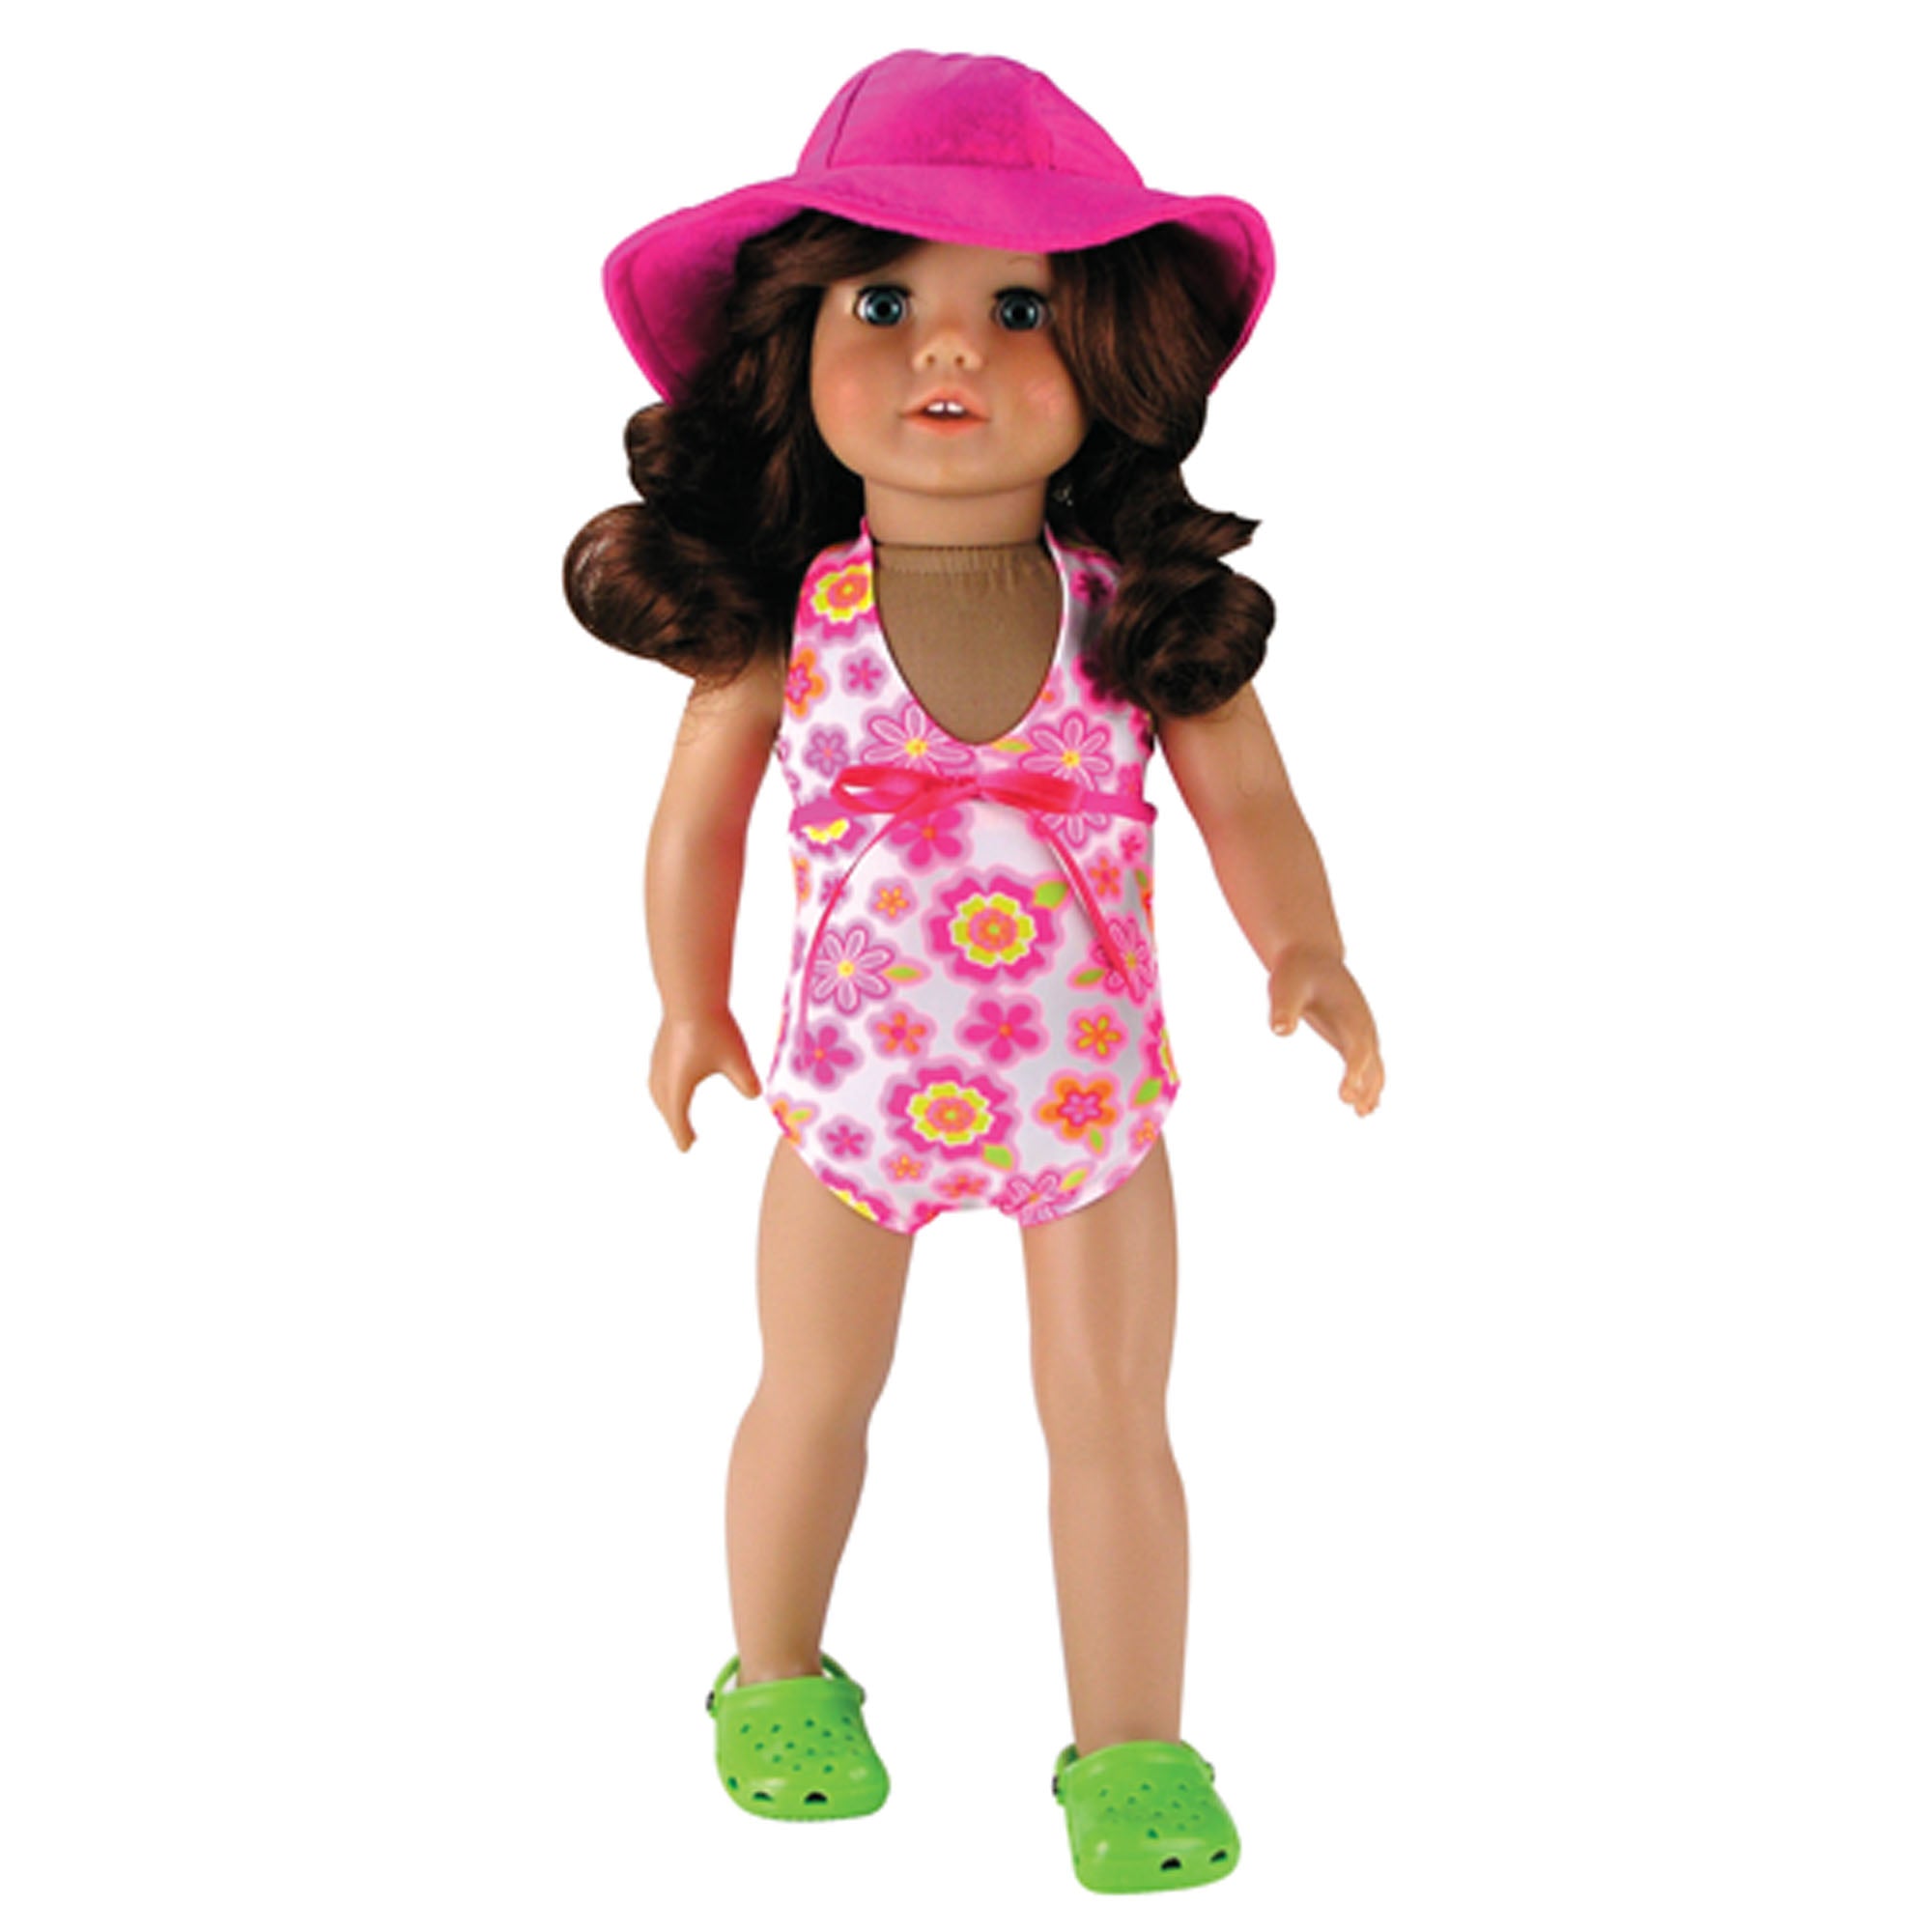 Sophia’s One-Piece Bathing Suit & Wide-Brimmed Floppy Hat Summer Set for 18” Dolls, Hot Pink